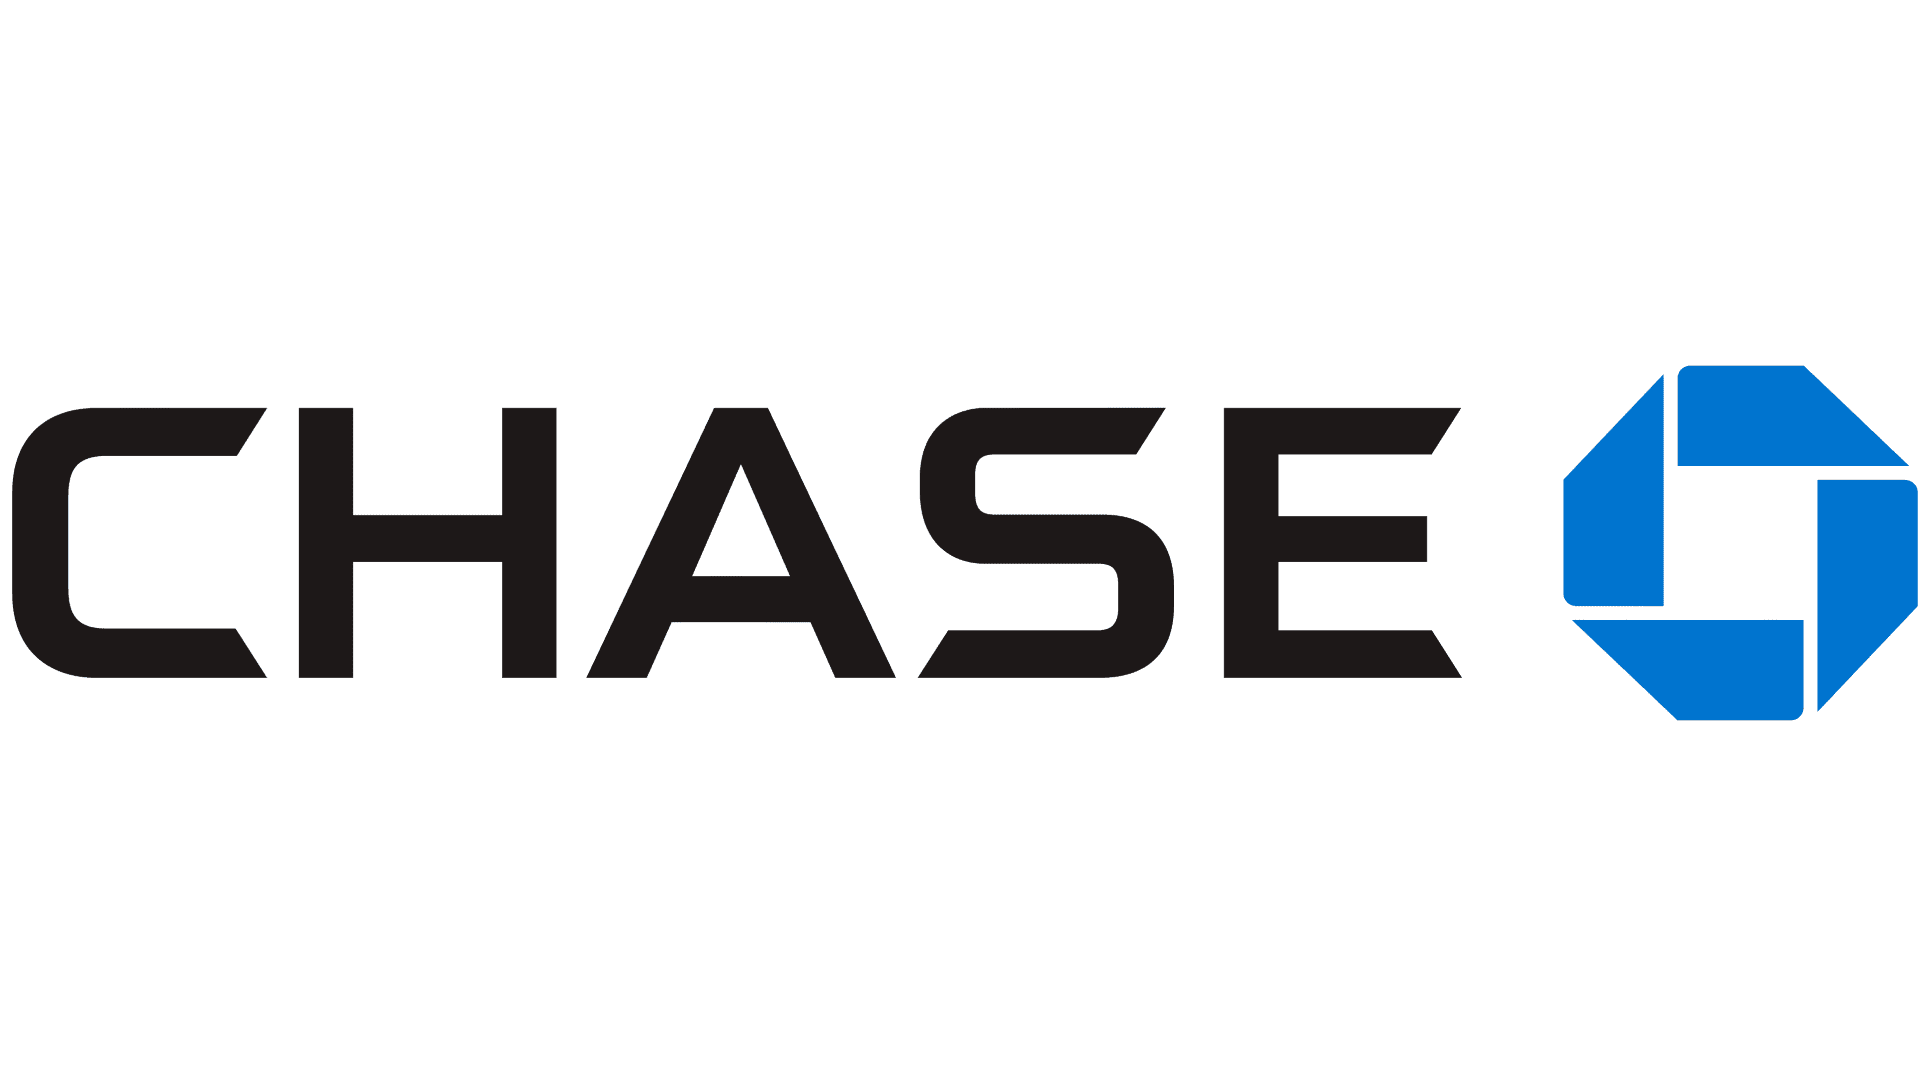 Chase Identity Theft Protection Image